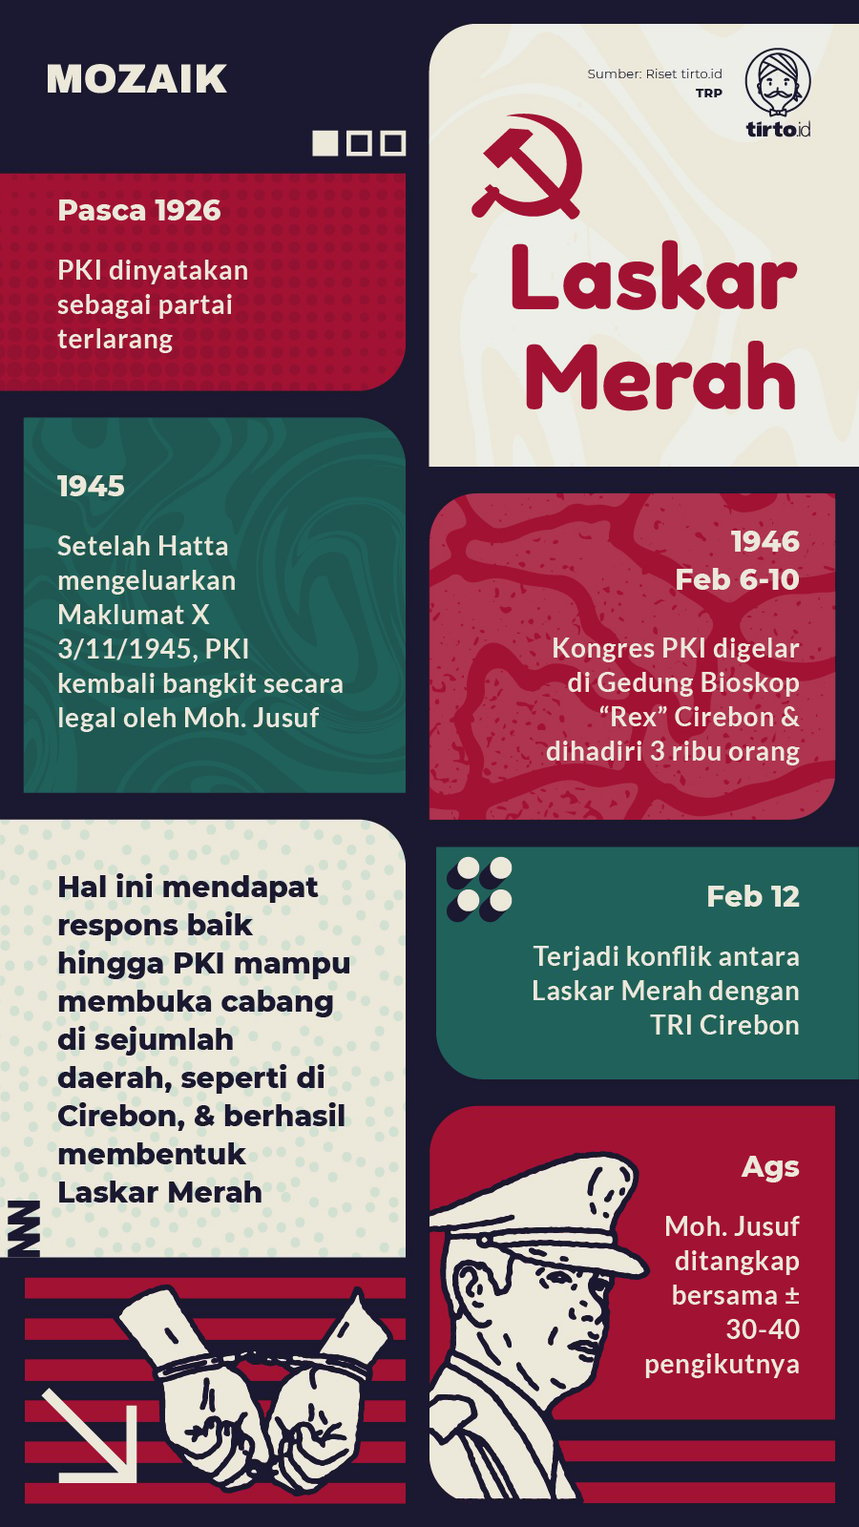 Infografik Mozaik Laskar Merah